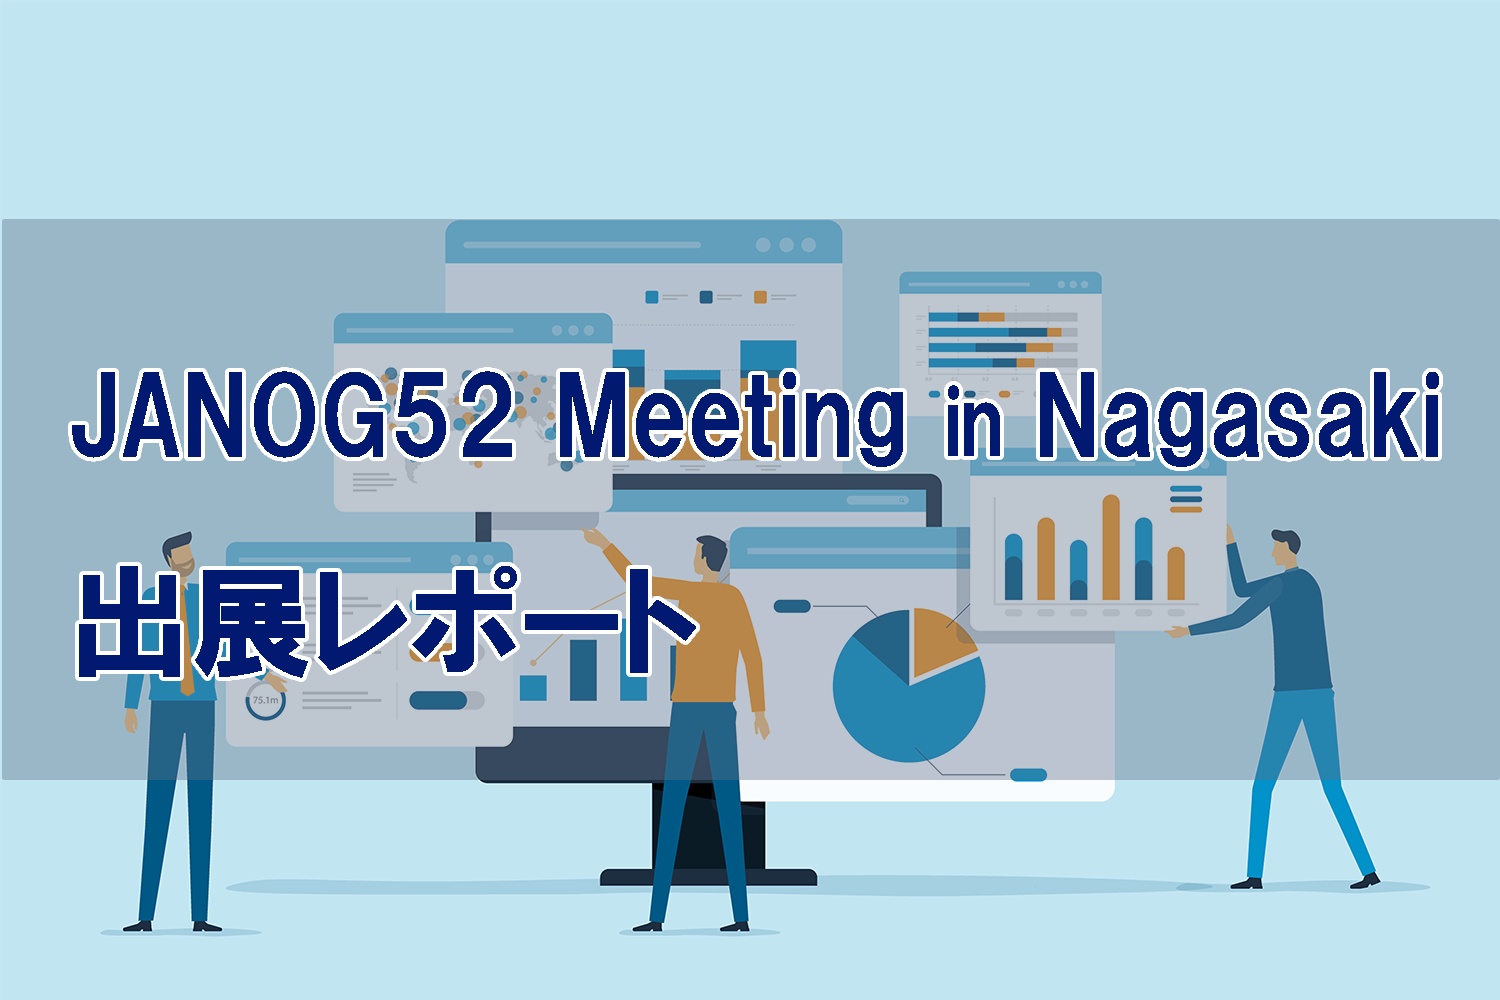 JANOG52 Meeting in Nagasaki 出展レポート